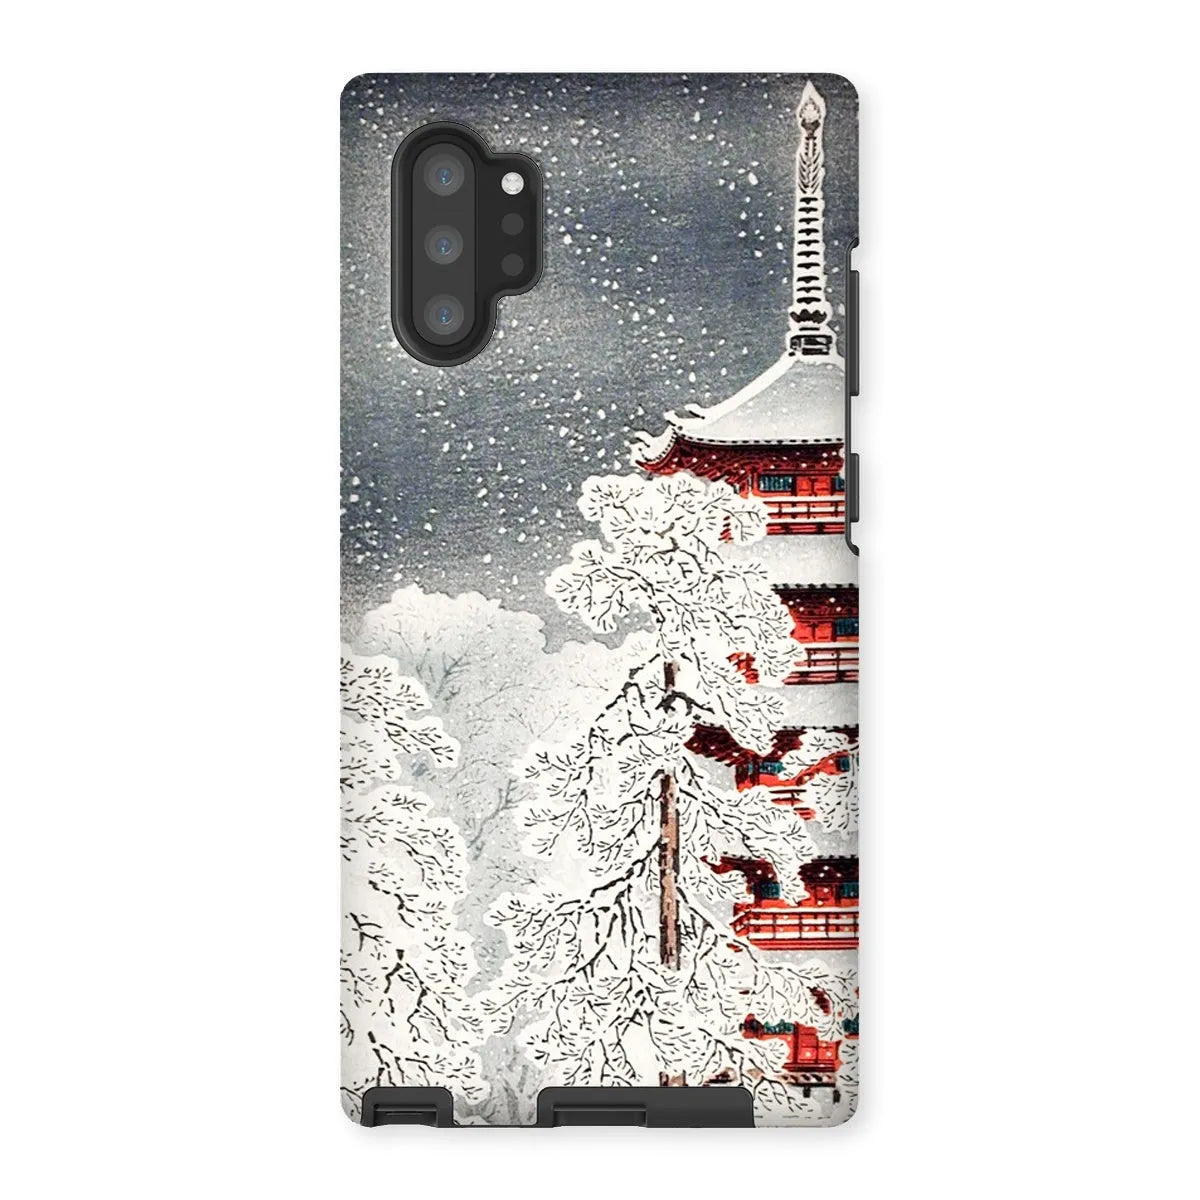 Snow At Asakusa - Shin-hanga Phone Case - Takahashi Shōtei - Samsung Galaxy Note 10p / Matte - Mobile Phone Cases